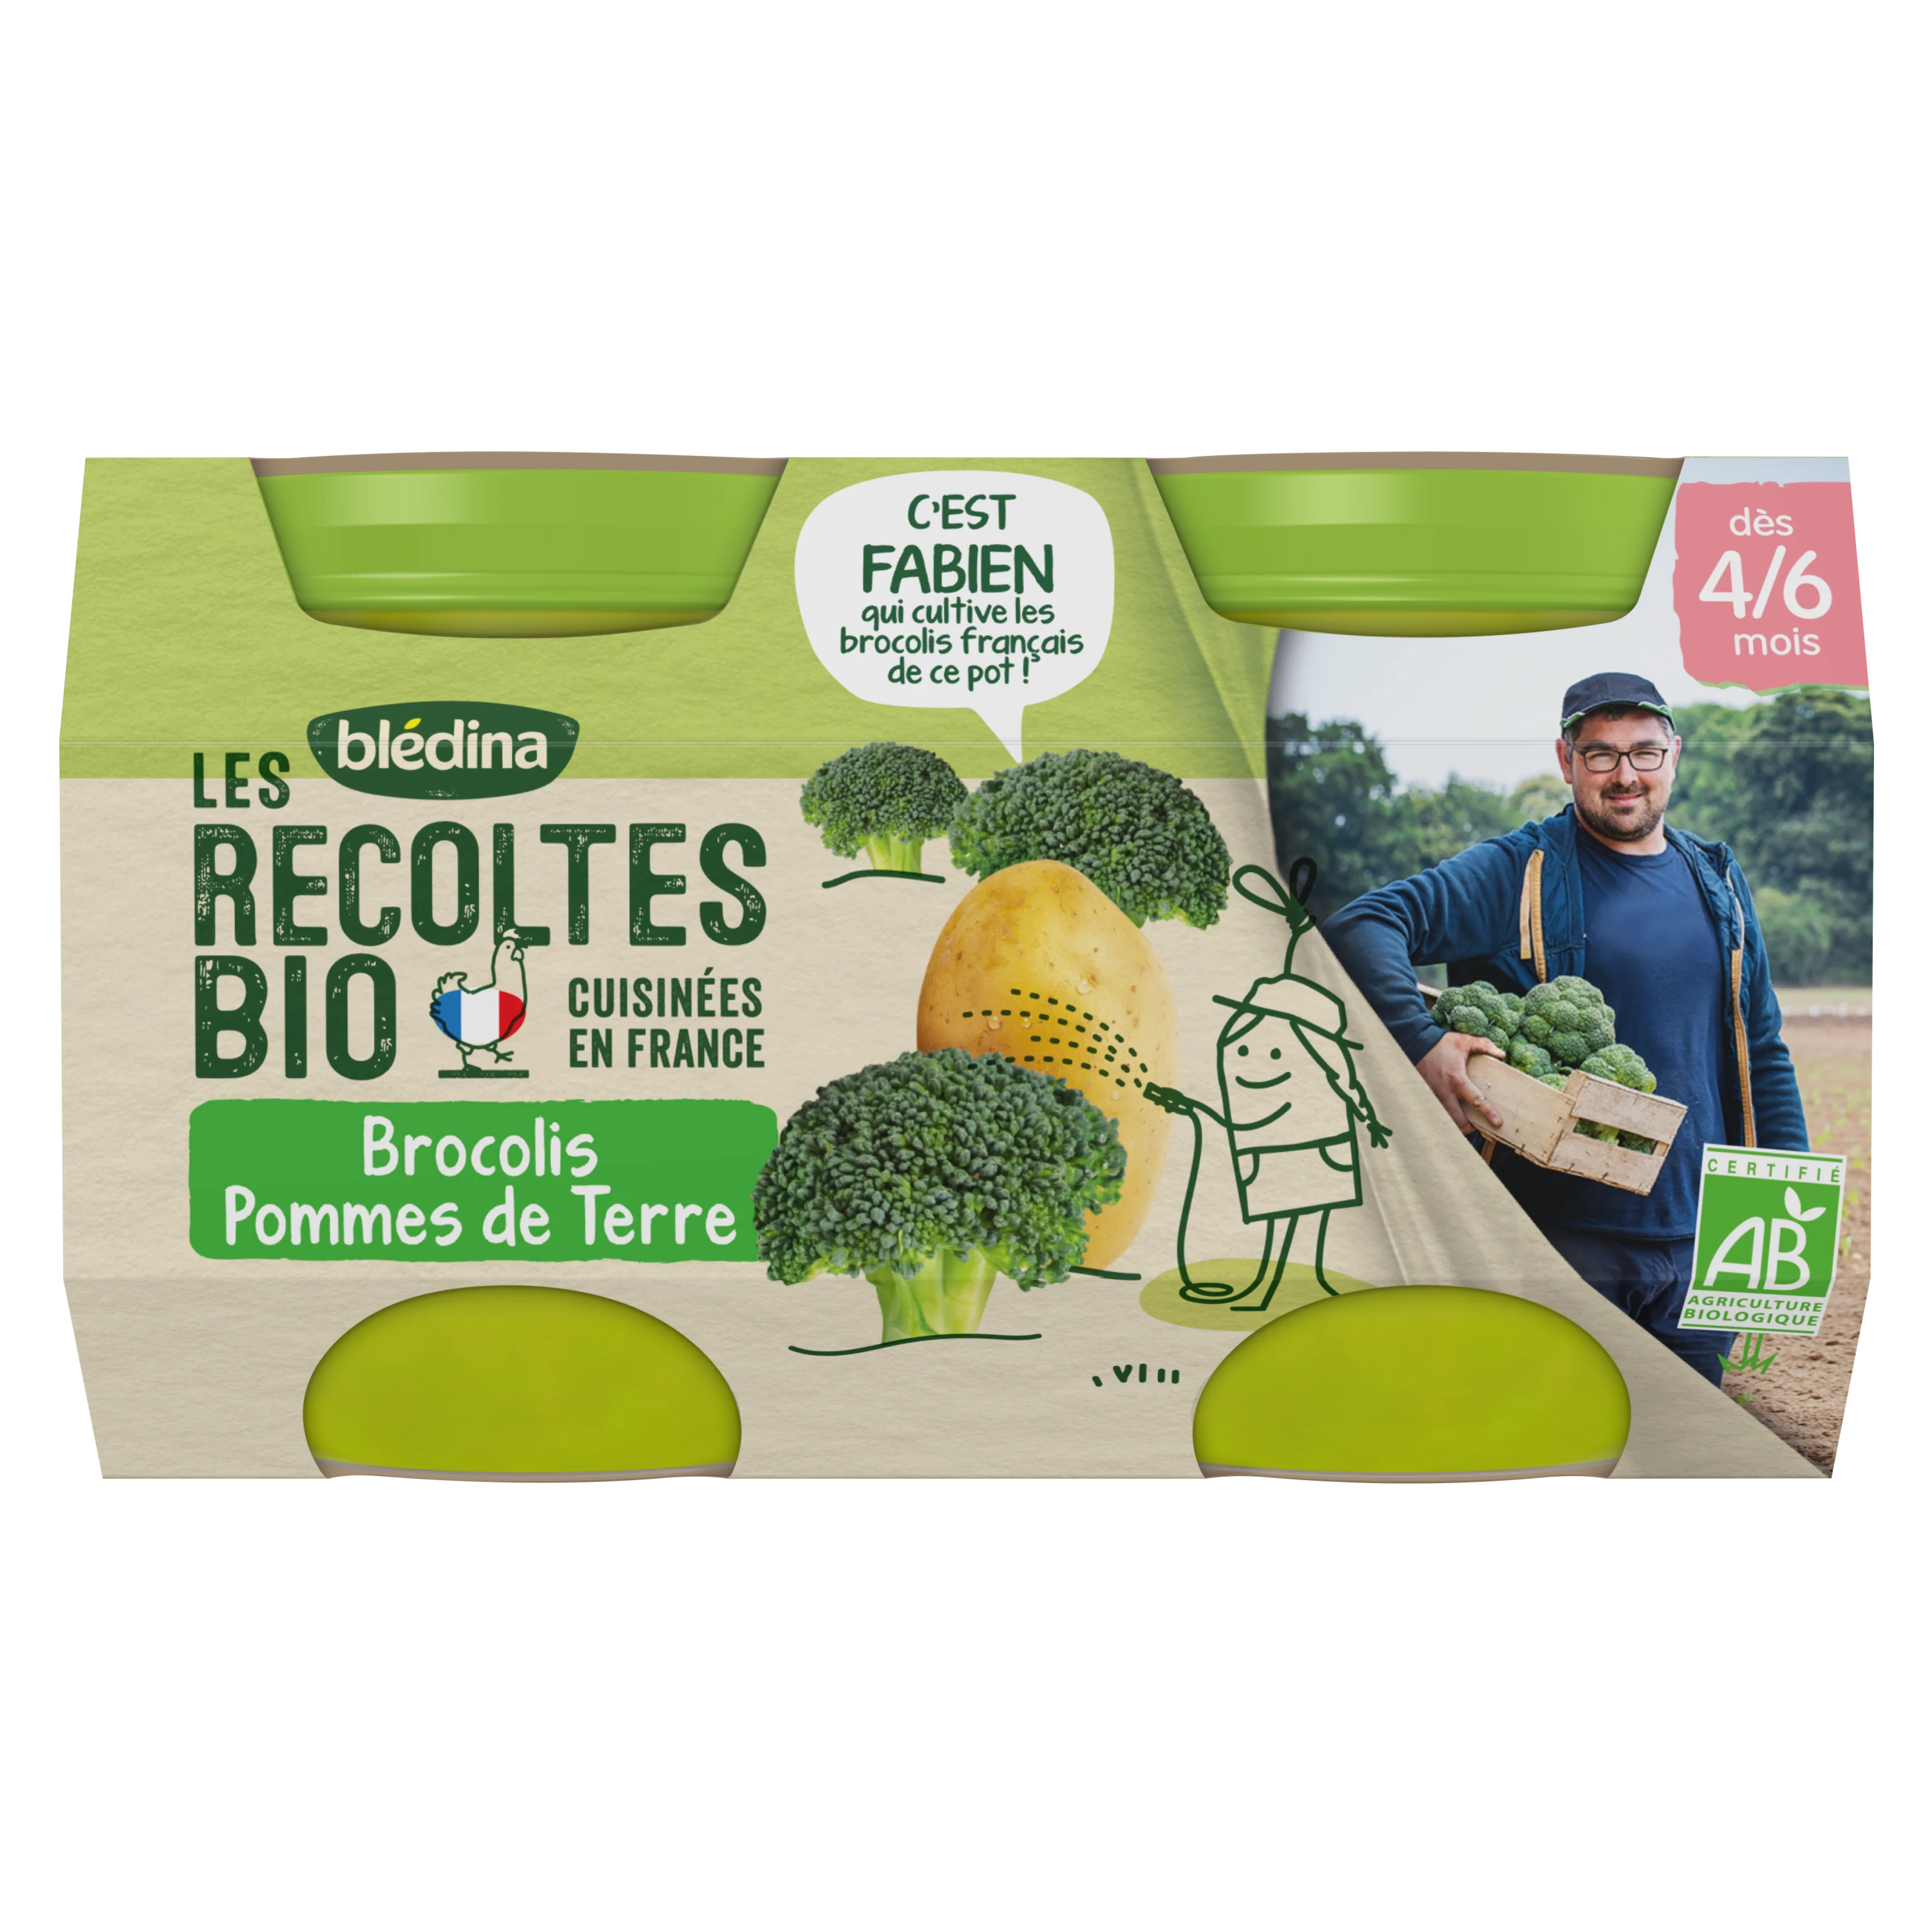 Piattino broccoli/patate bio da 4/6 mesi 2x130g - BLEDINA